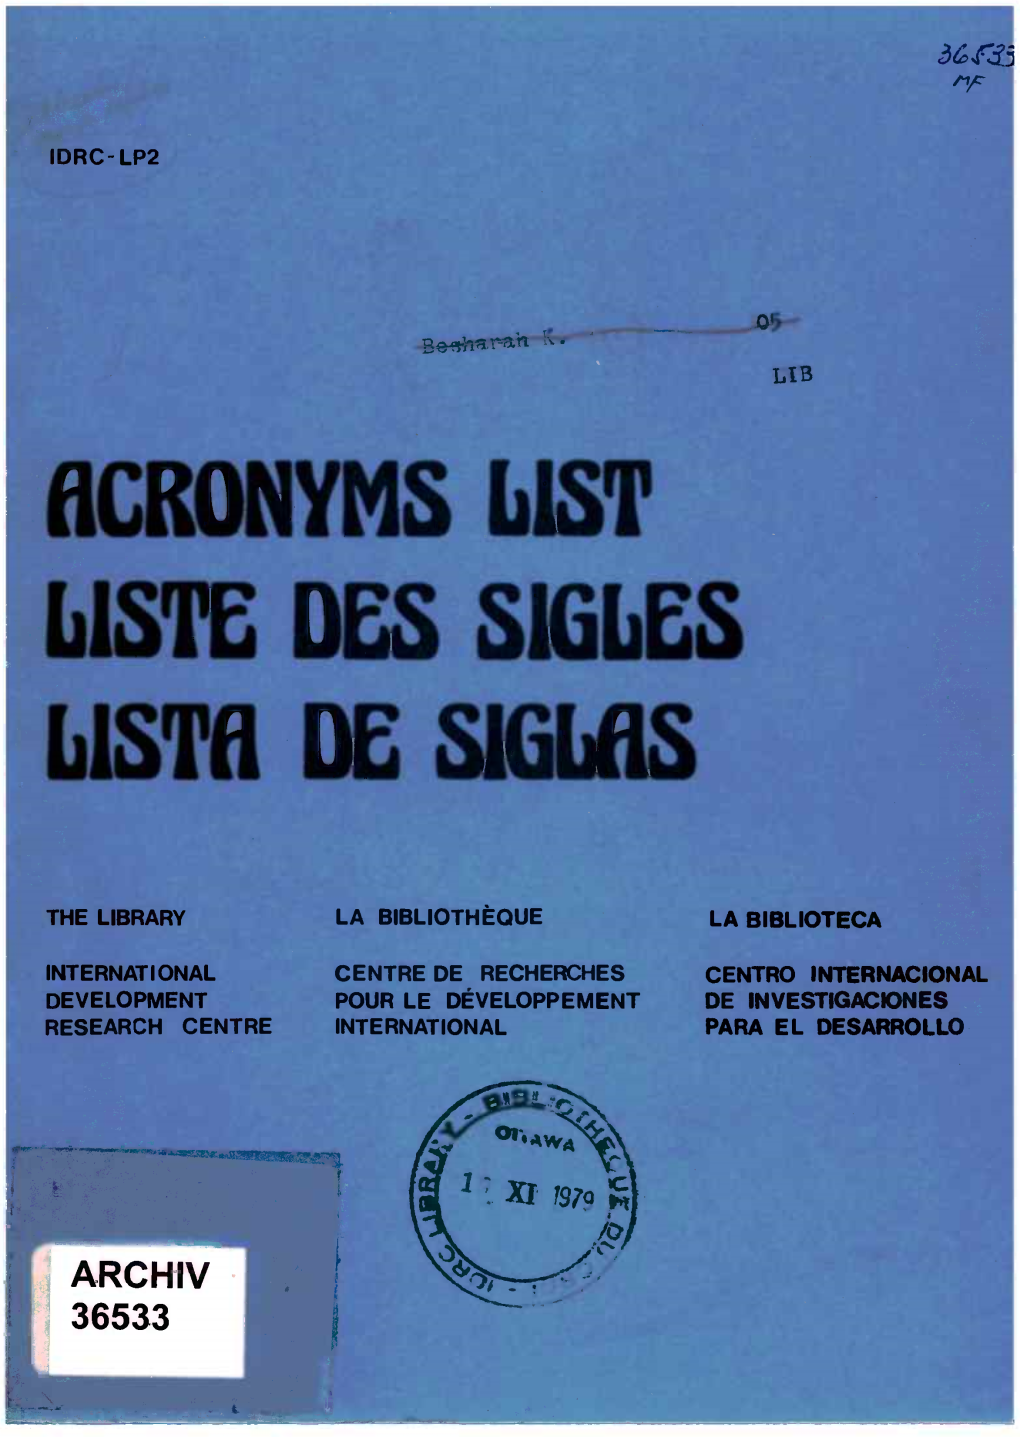 LIST DS Siglks LISTQ D Sigifis